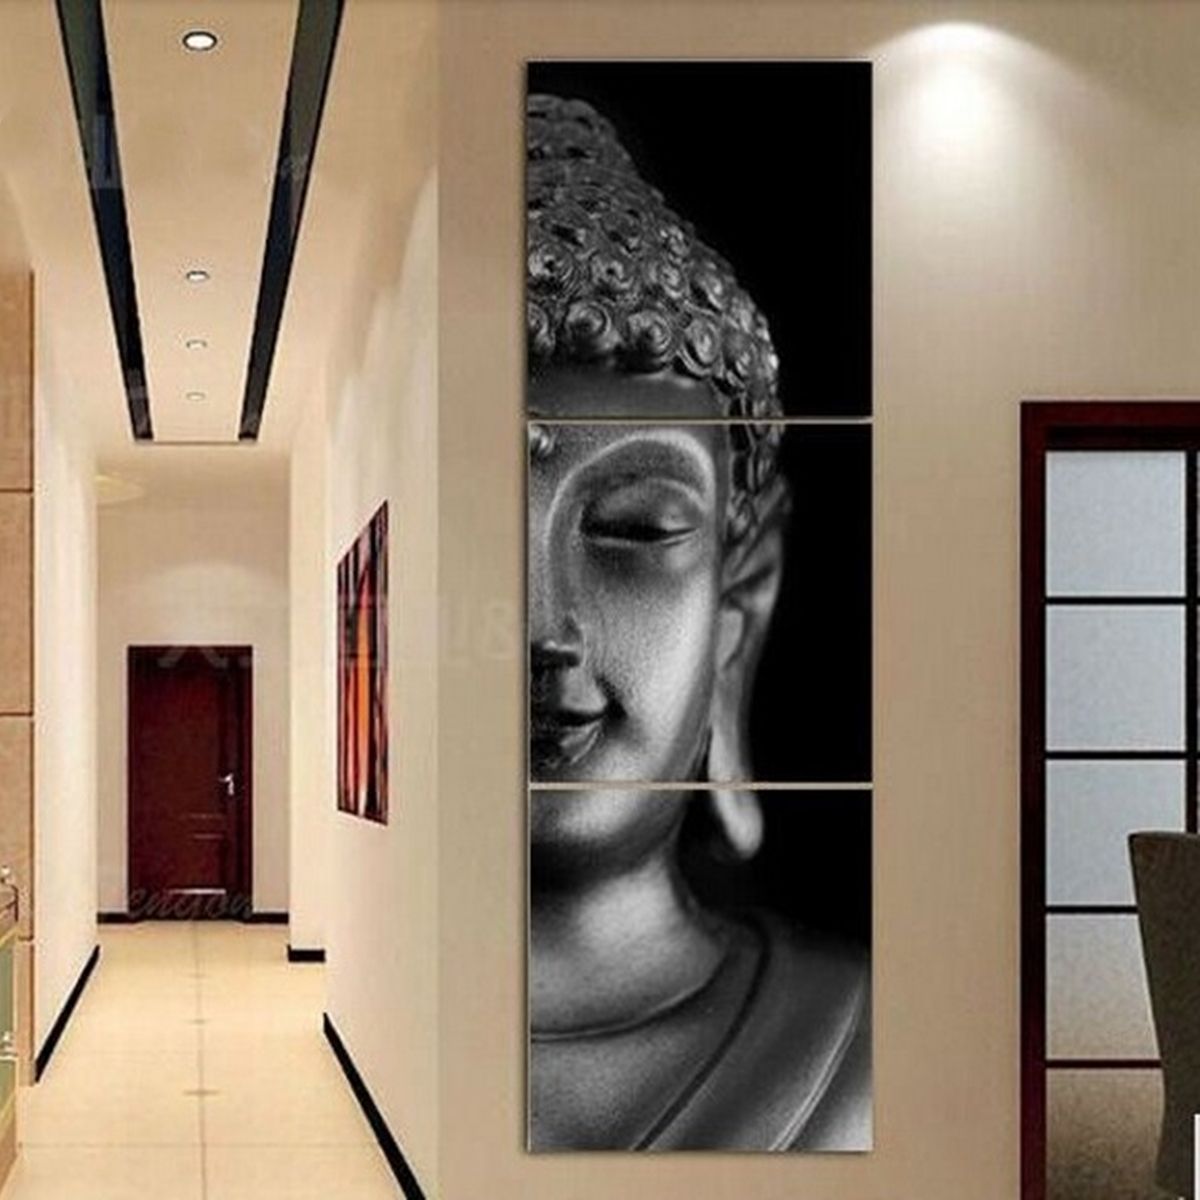 B-uddha-Statue-Meditation-Painting-HD-Print-on-Canvas-Home-Room-Wall-Art-Paper-Decorations-1497976